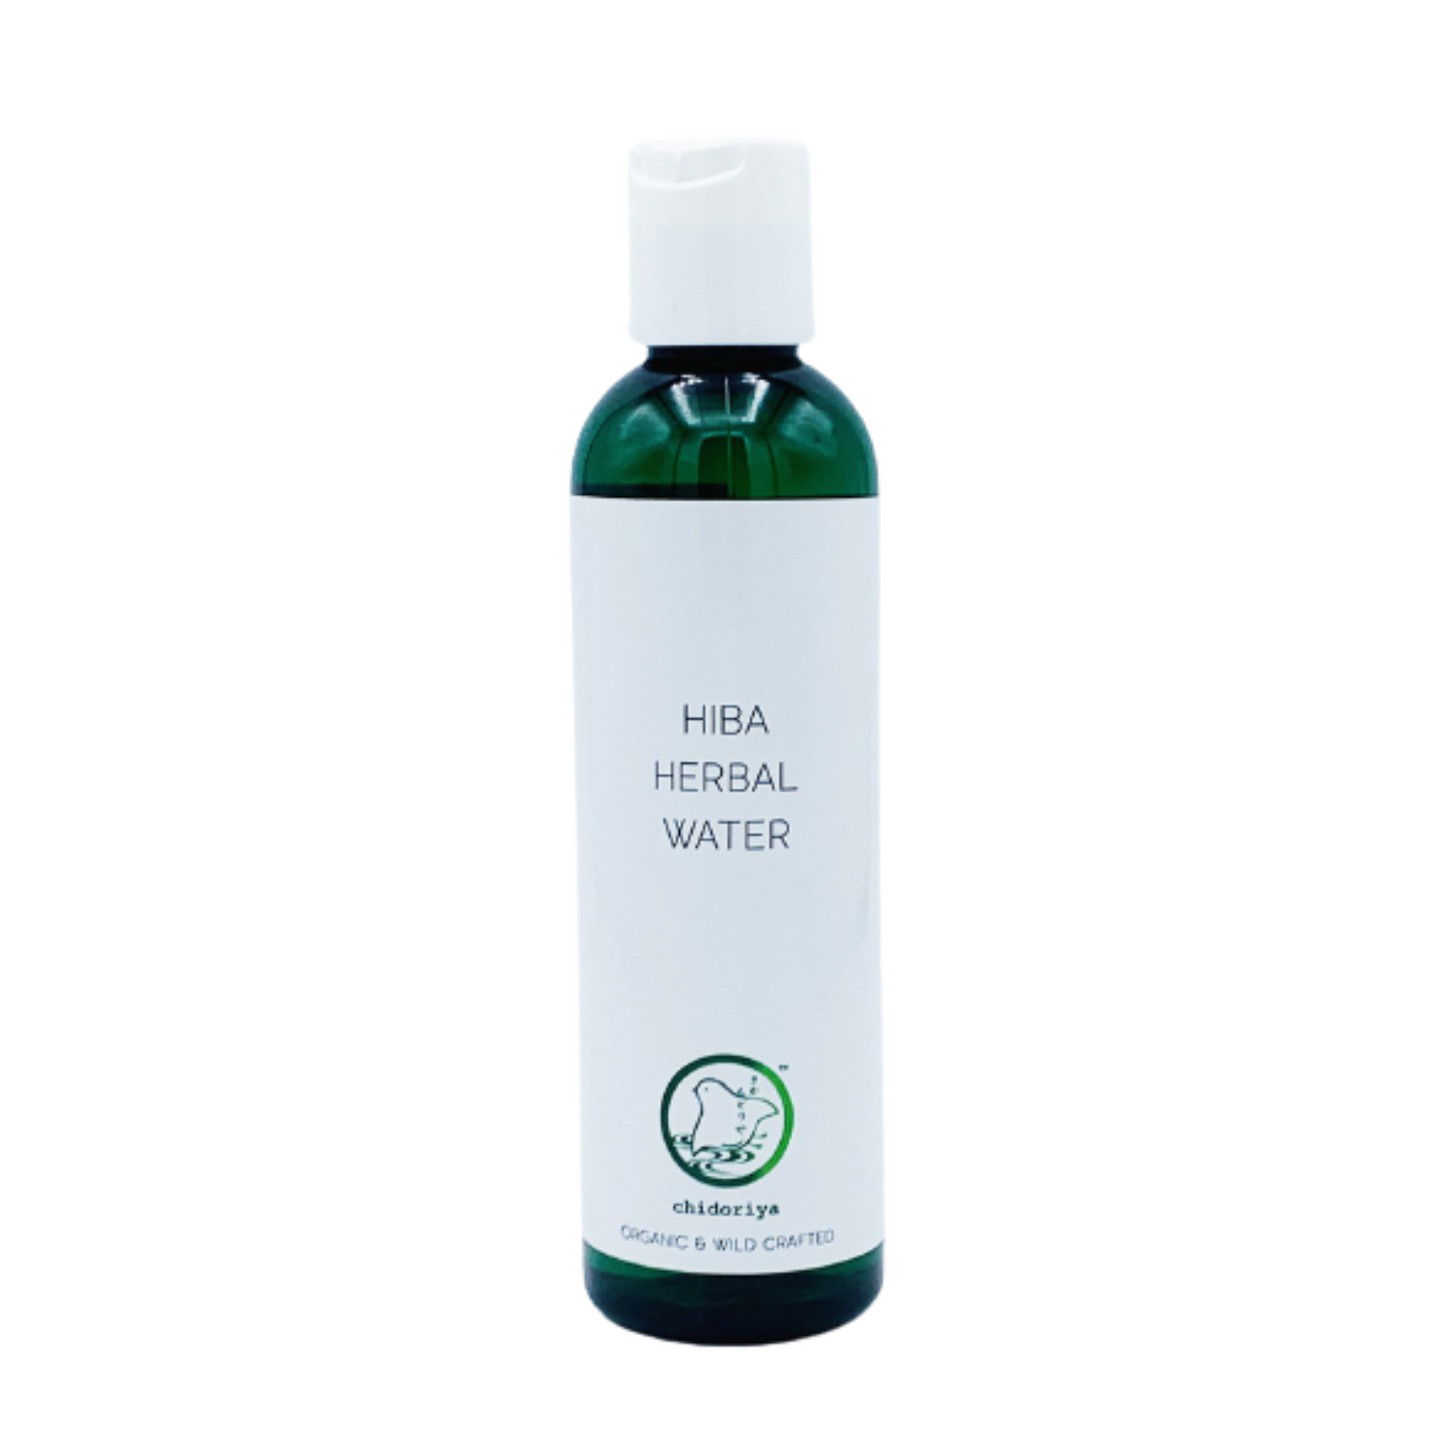 Primary Image of Hiba Herbal Water